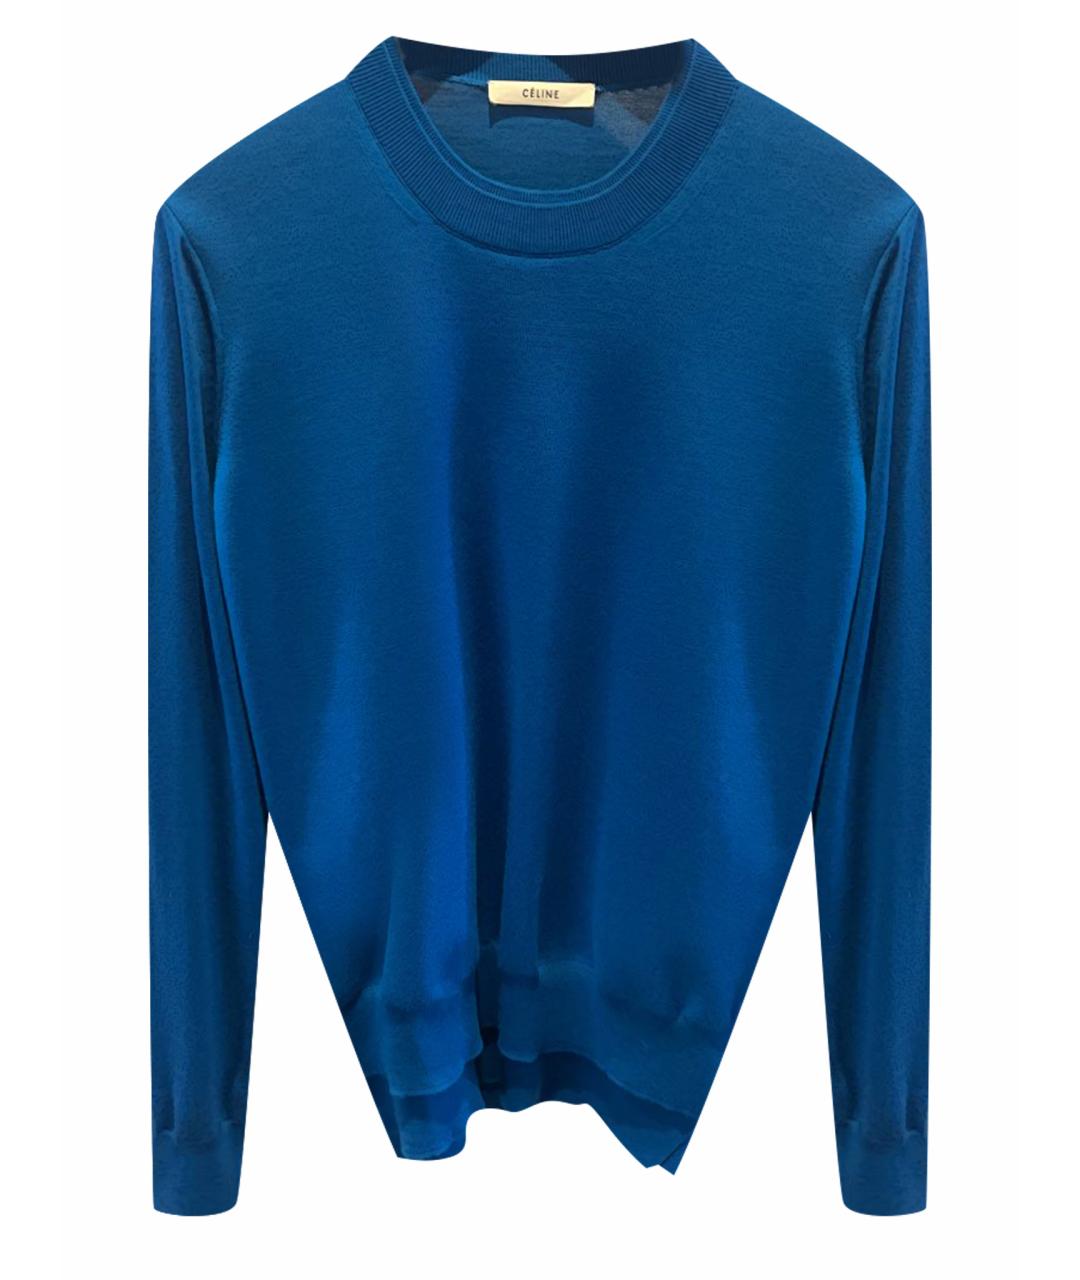 CELINE Голубой шерстяной джемпер / свитер, фото 1